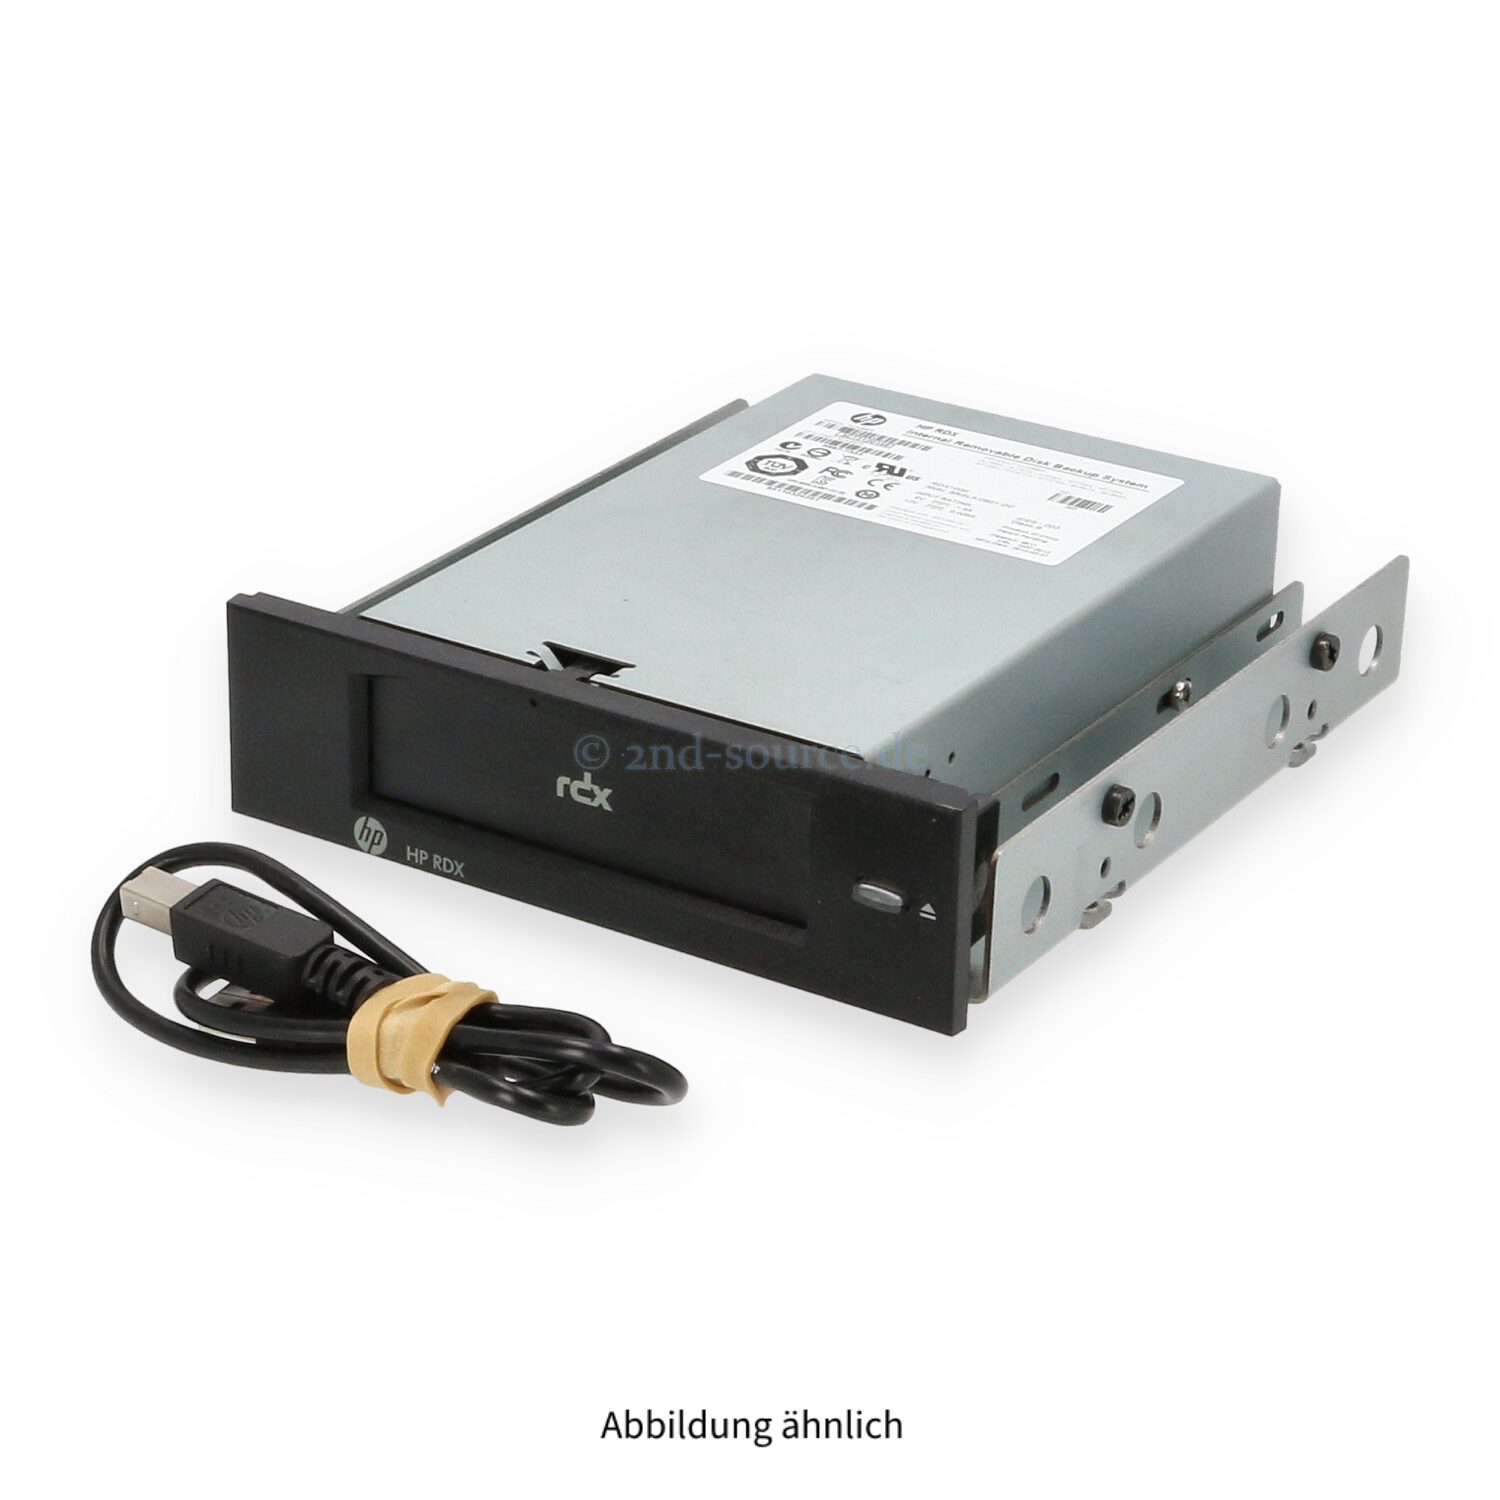 HPE RDX1000 Internal Removable Disk Backup System BV847A 487768-001